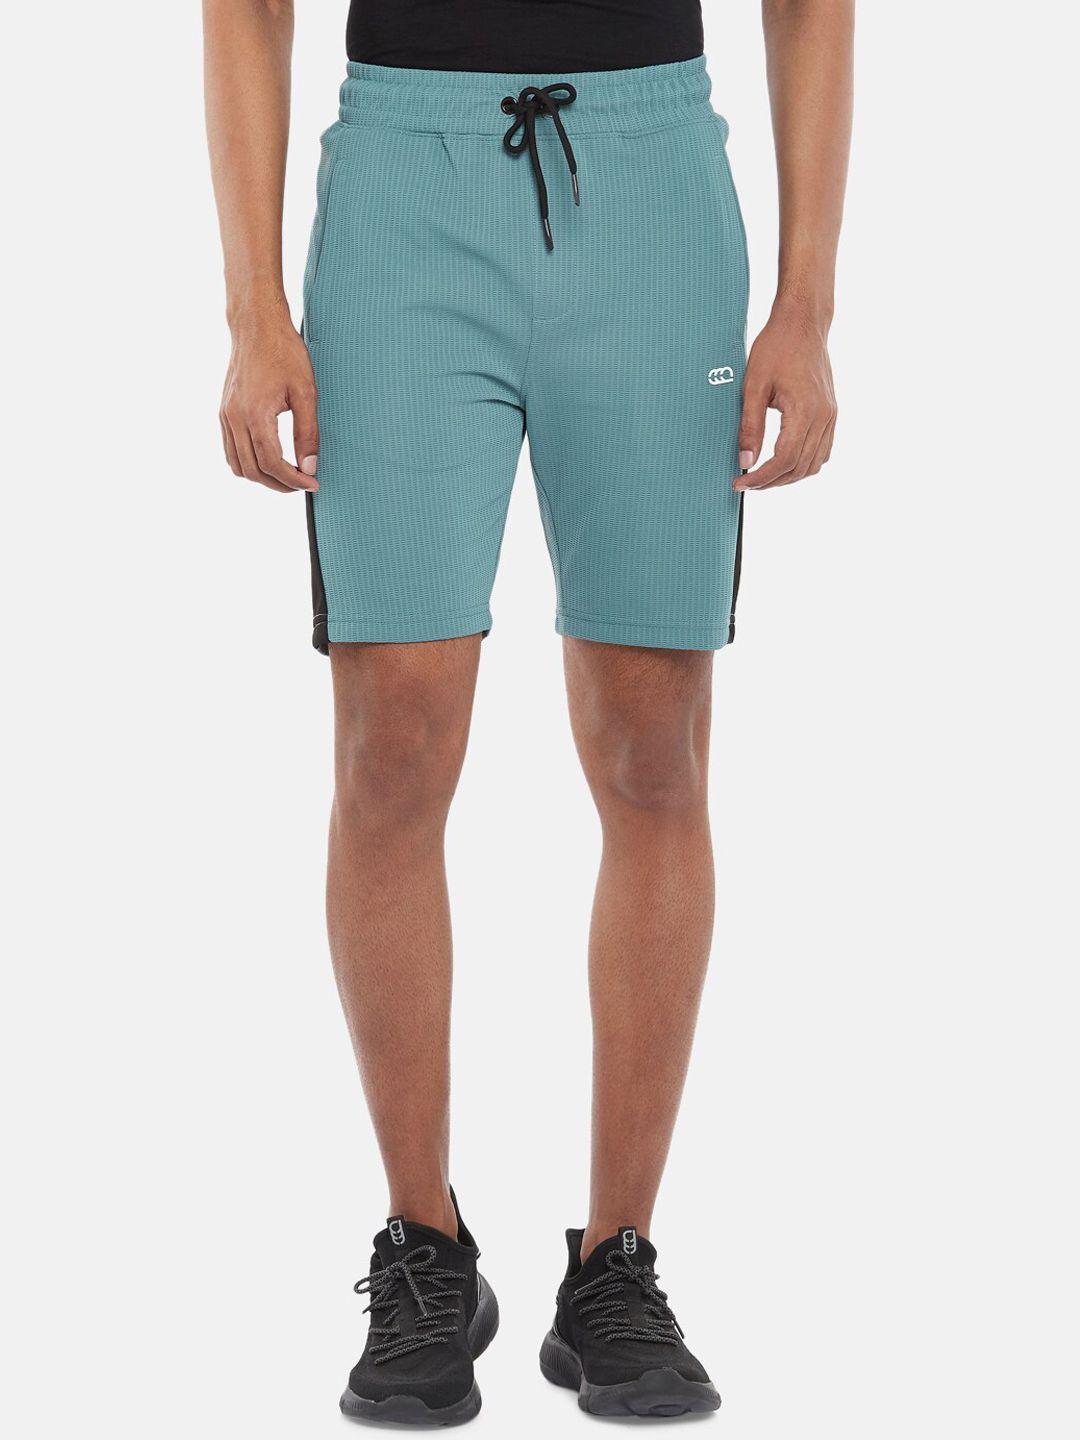 ajile-by-pantaloons-men-teal-green-slim-fit-sports-shorts